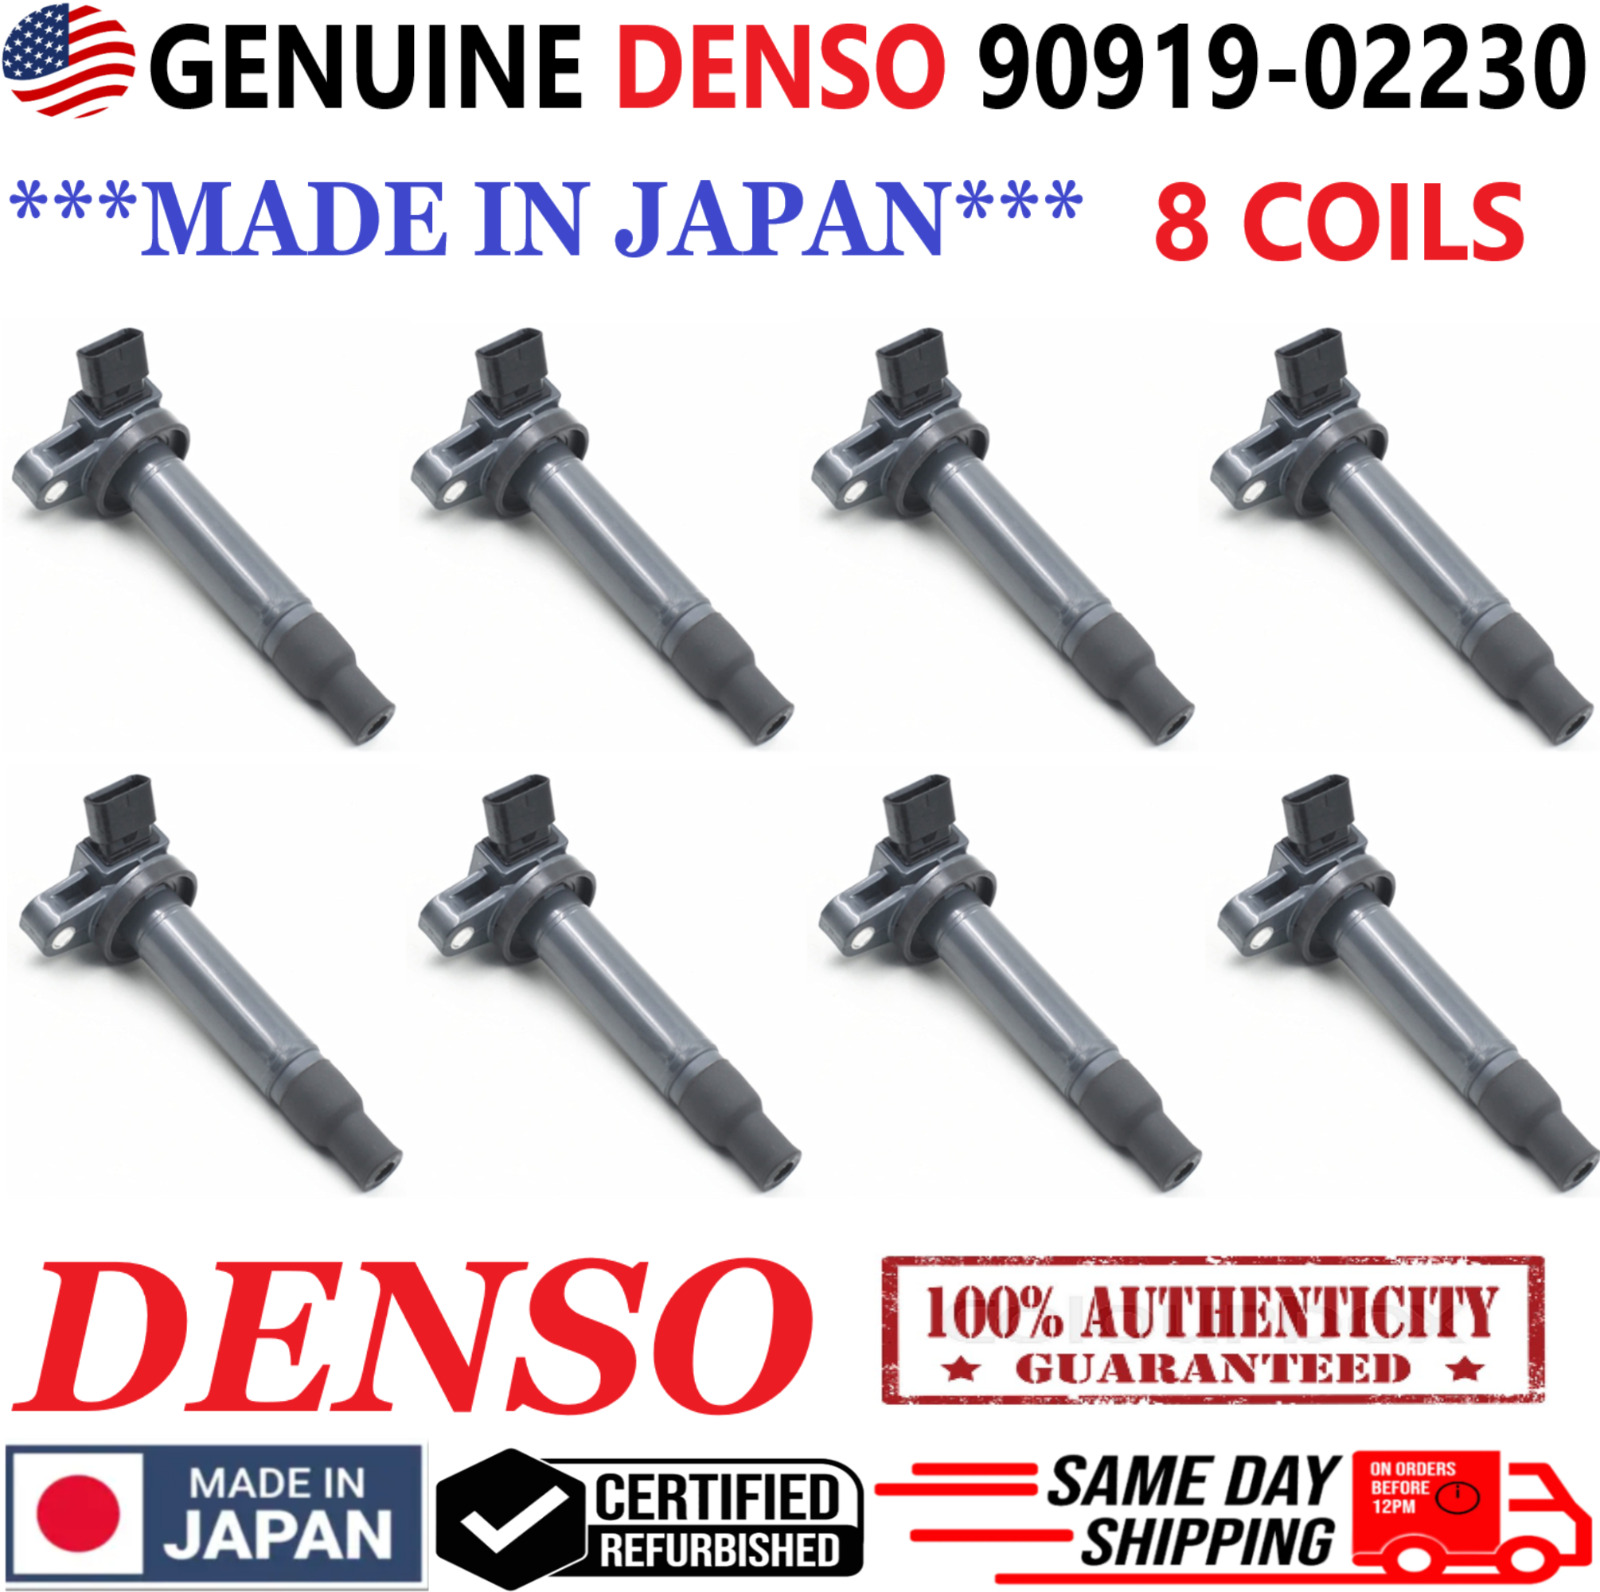 OEM GENUINE DENSO x8 Ignition Coils For 1998-2009 Toyota & Lexus V8, 90919-02230